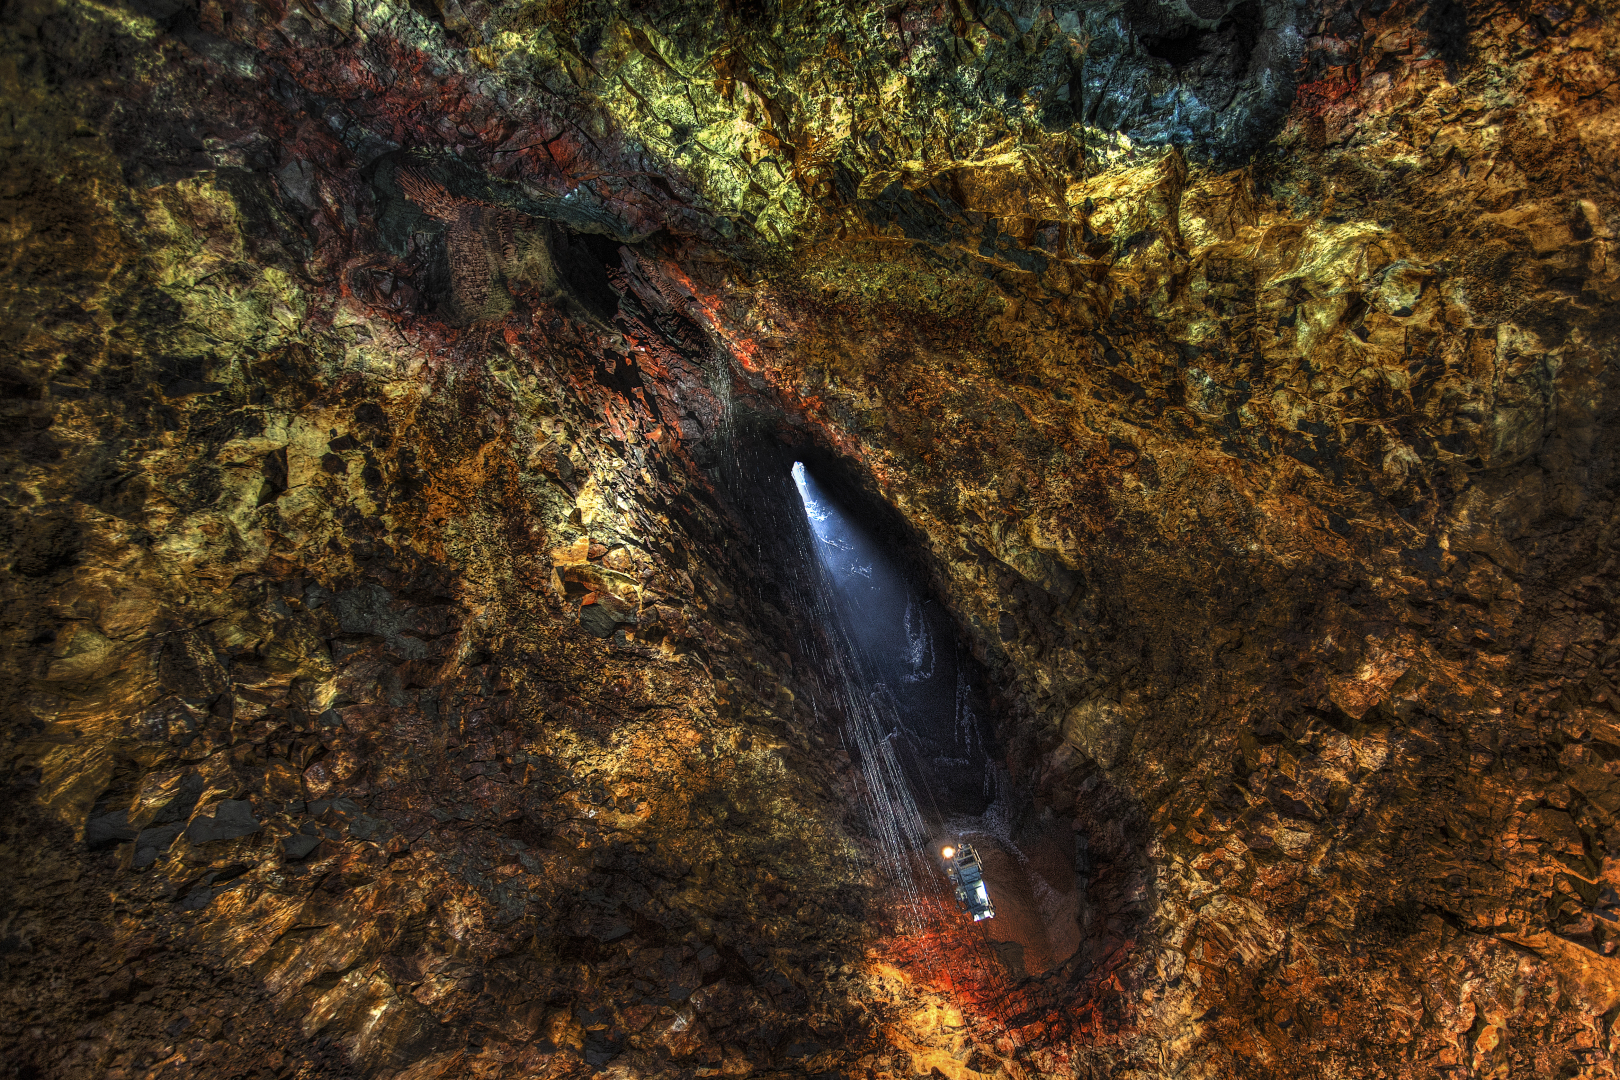 thrihnukagigur, the deepest cave in Iceland